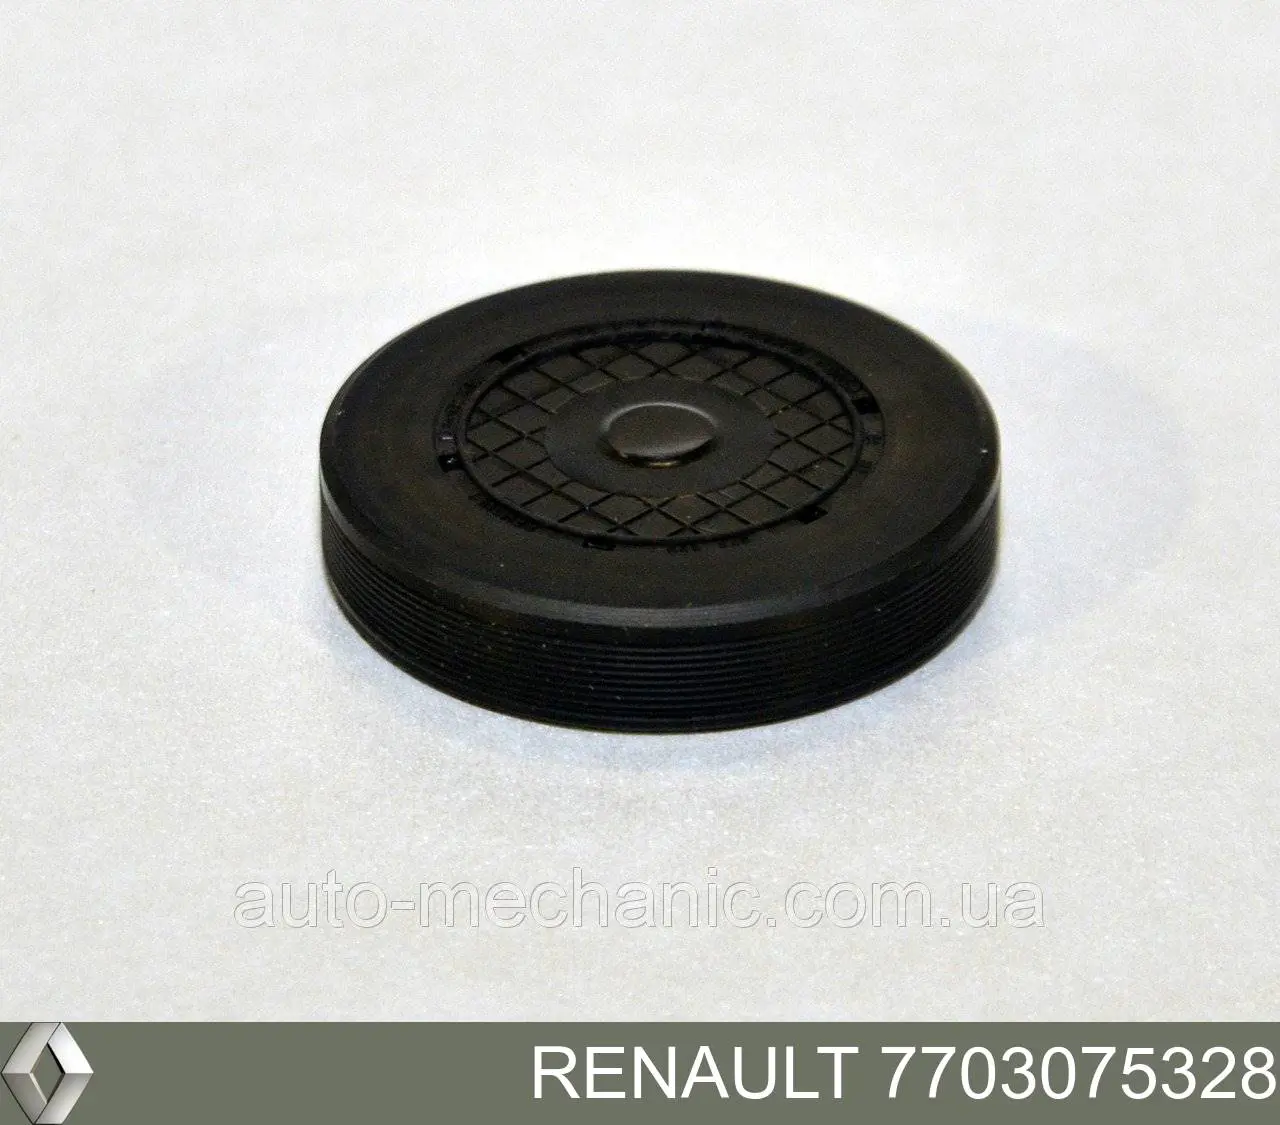 7703075328 Renault (RVI) заглушка гбц/блока цилиндров